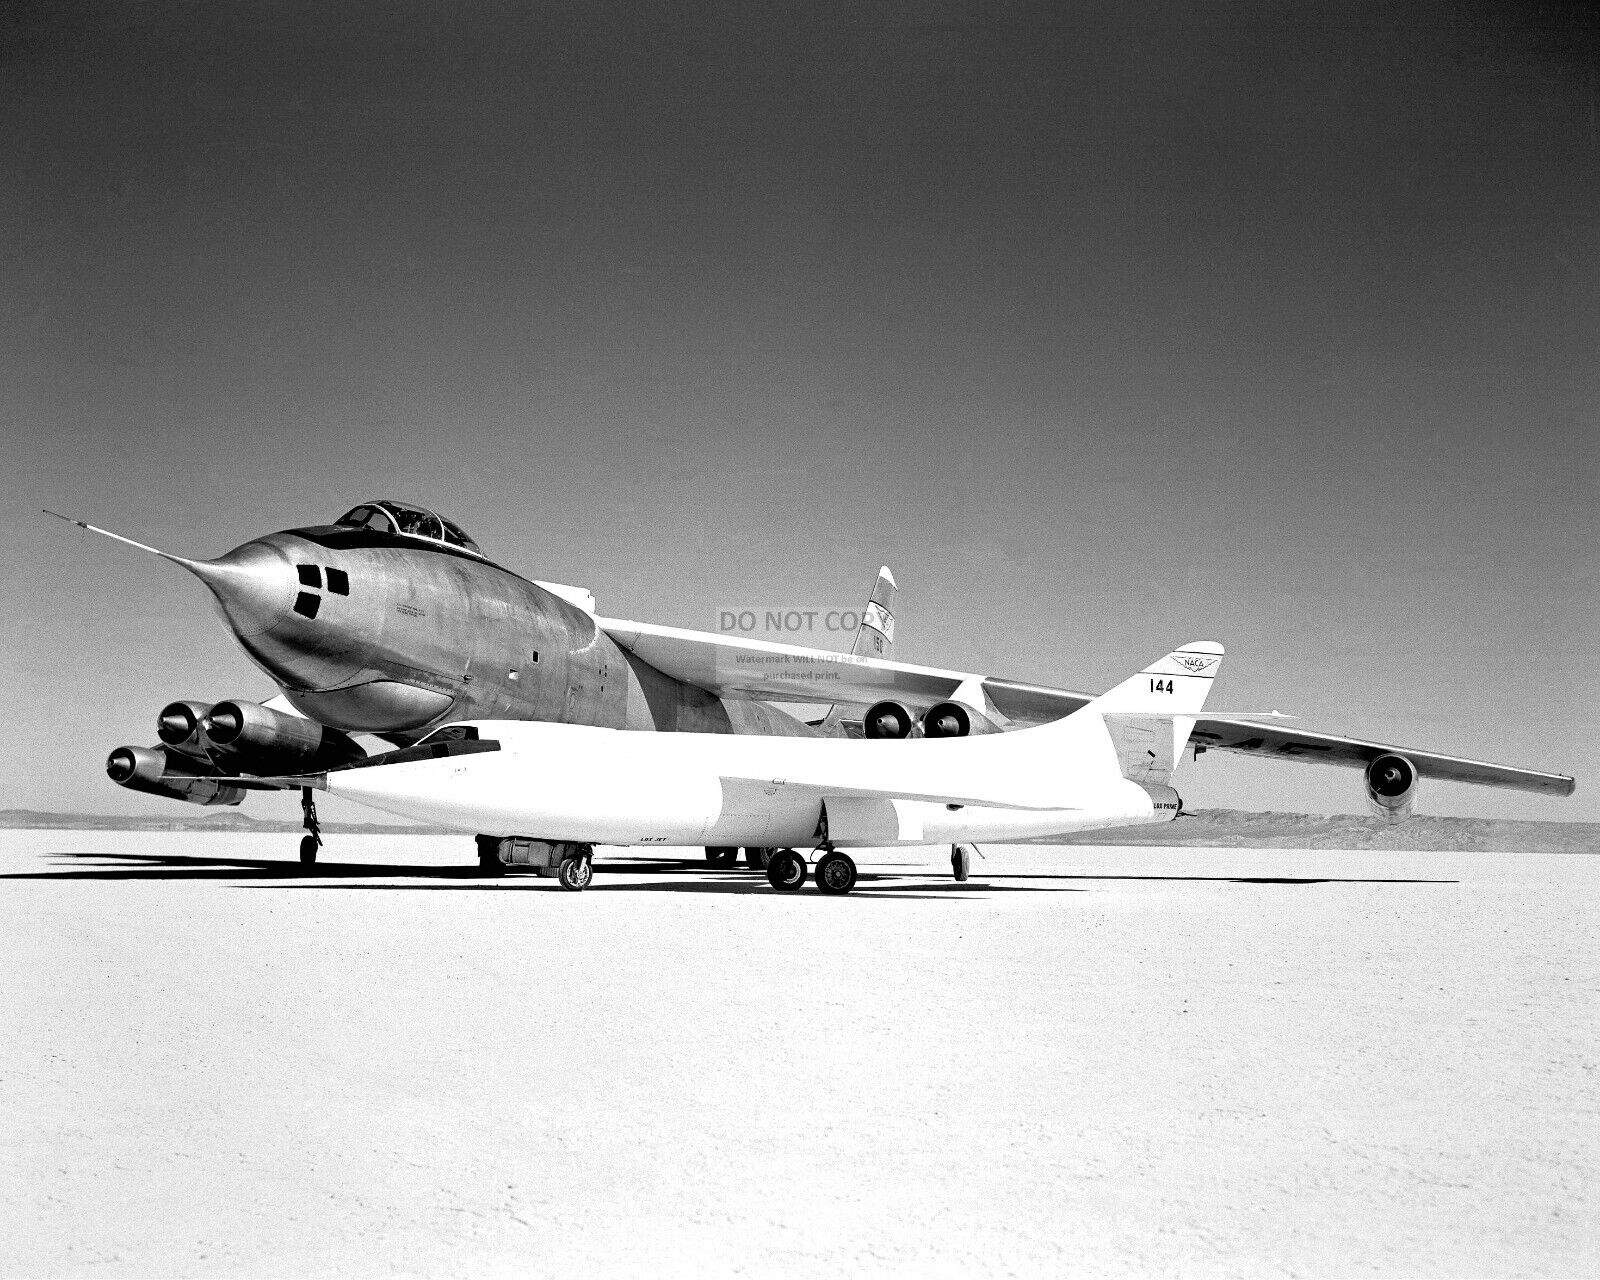 DOUGLAS D-558-2 & BOEING B-47A STRATOJET AIRCRAFT ON RAMP - 8X10 PHOTO (EP-052)